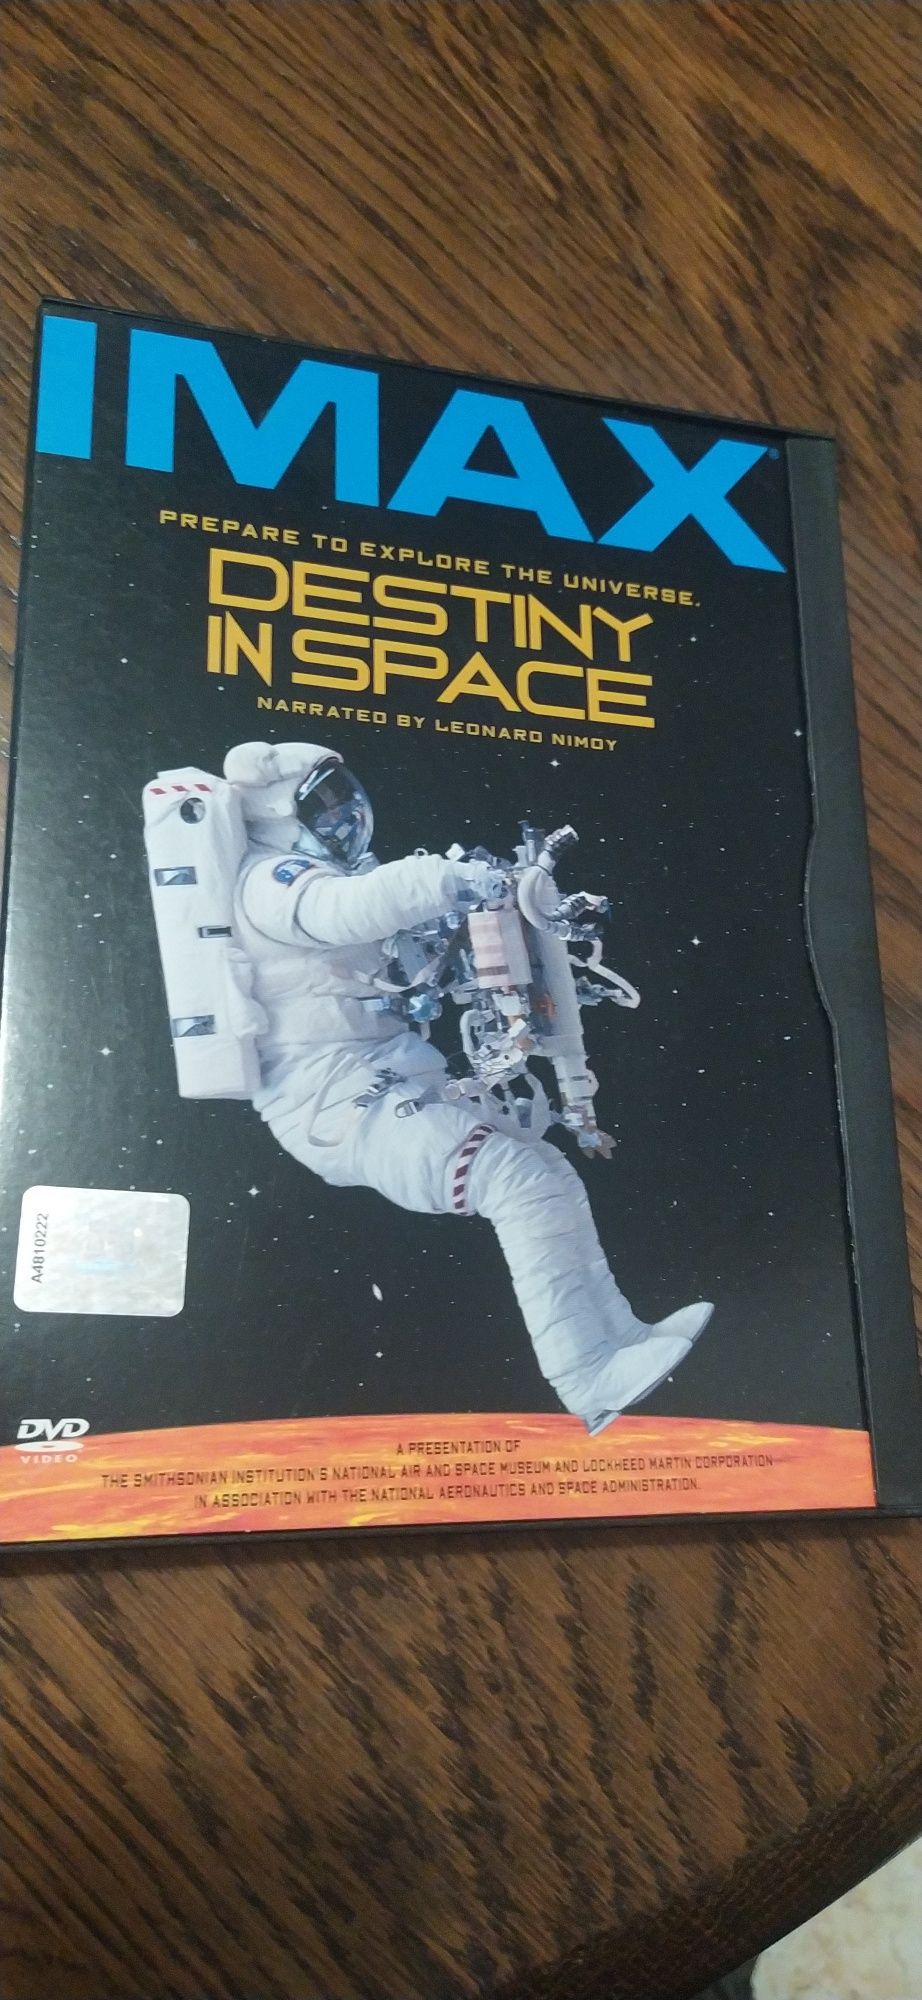 Tajemnice Kosmosu IMAX dvd